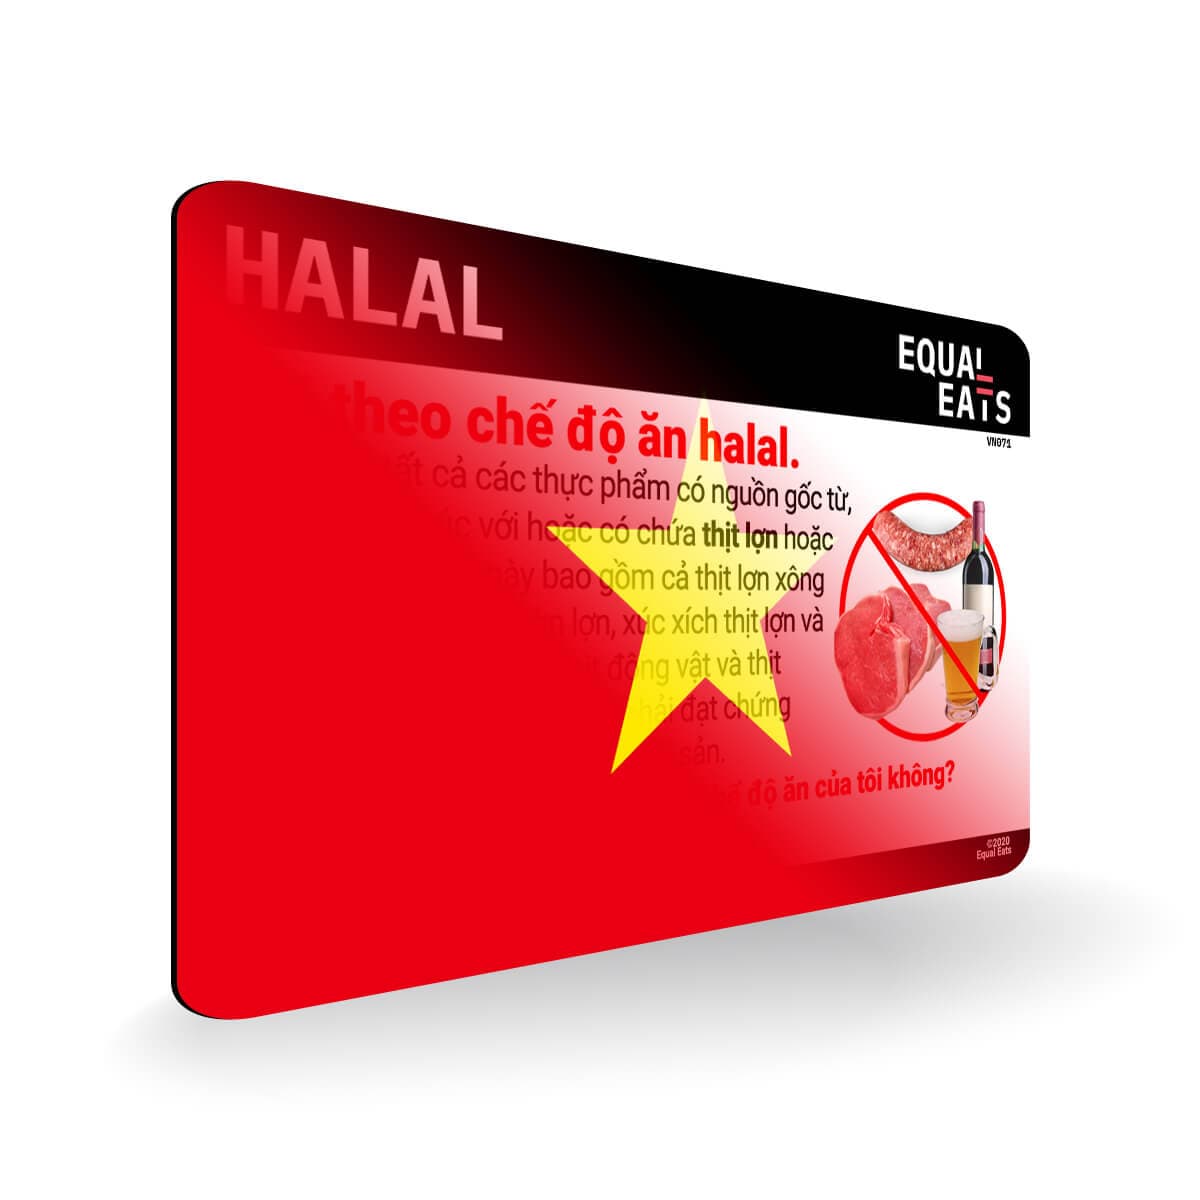 Halal Diet in Vietnamese. Halal Food Card for Vietnam